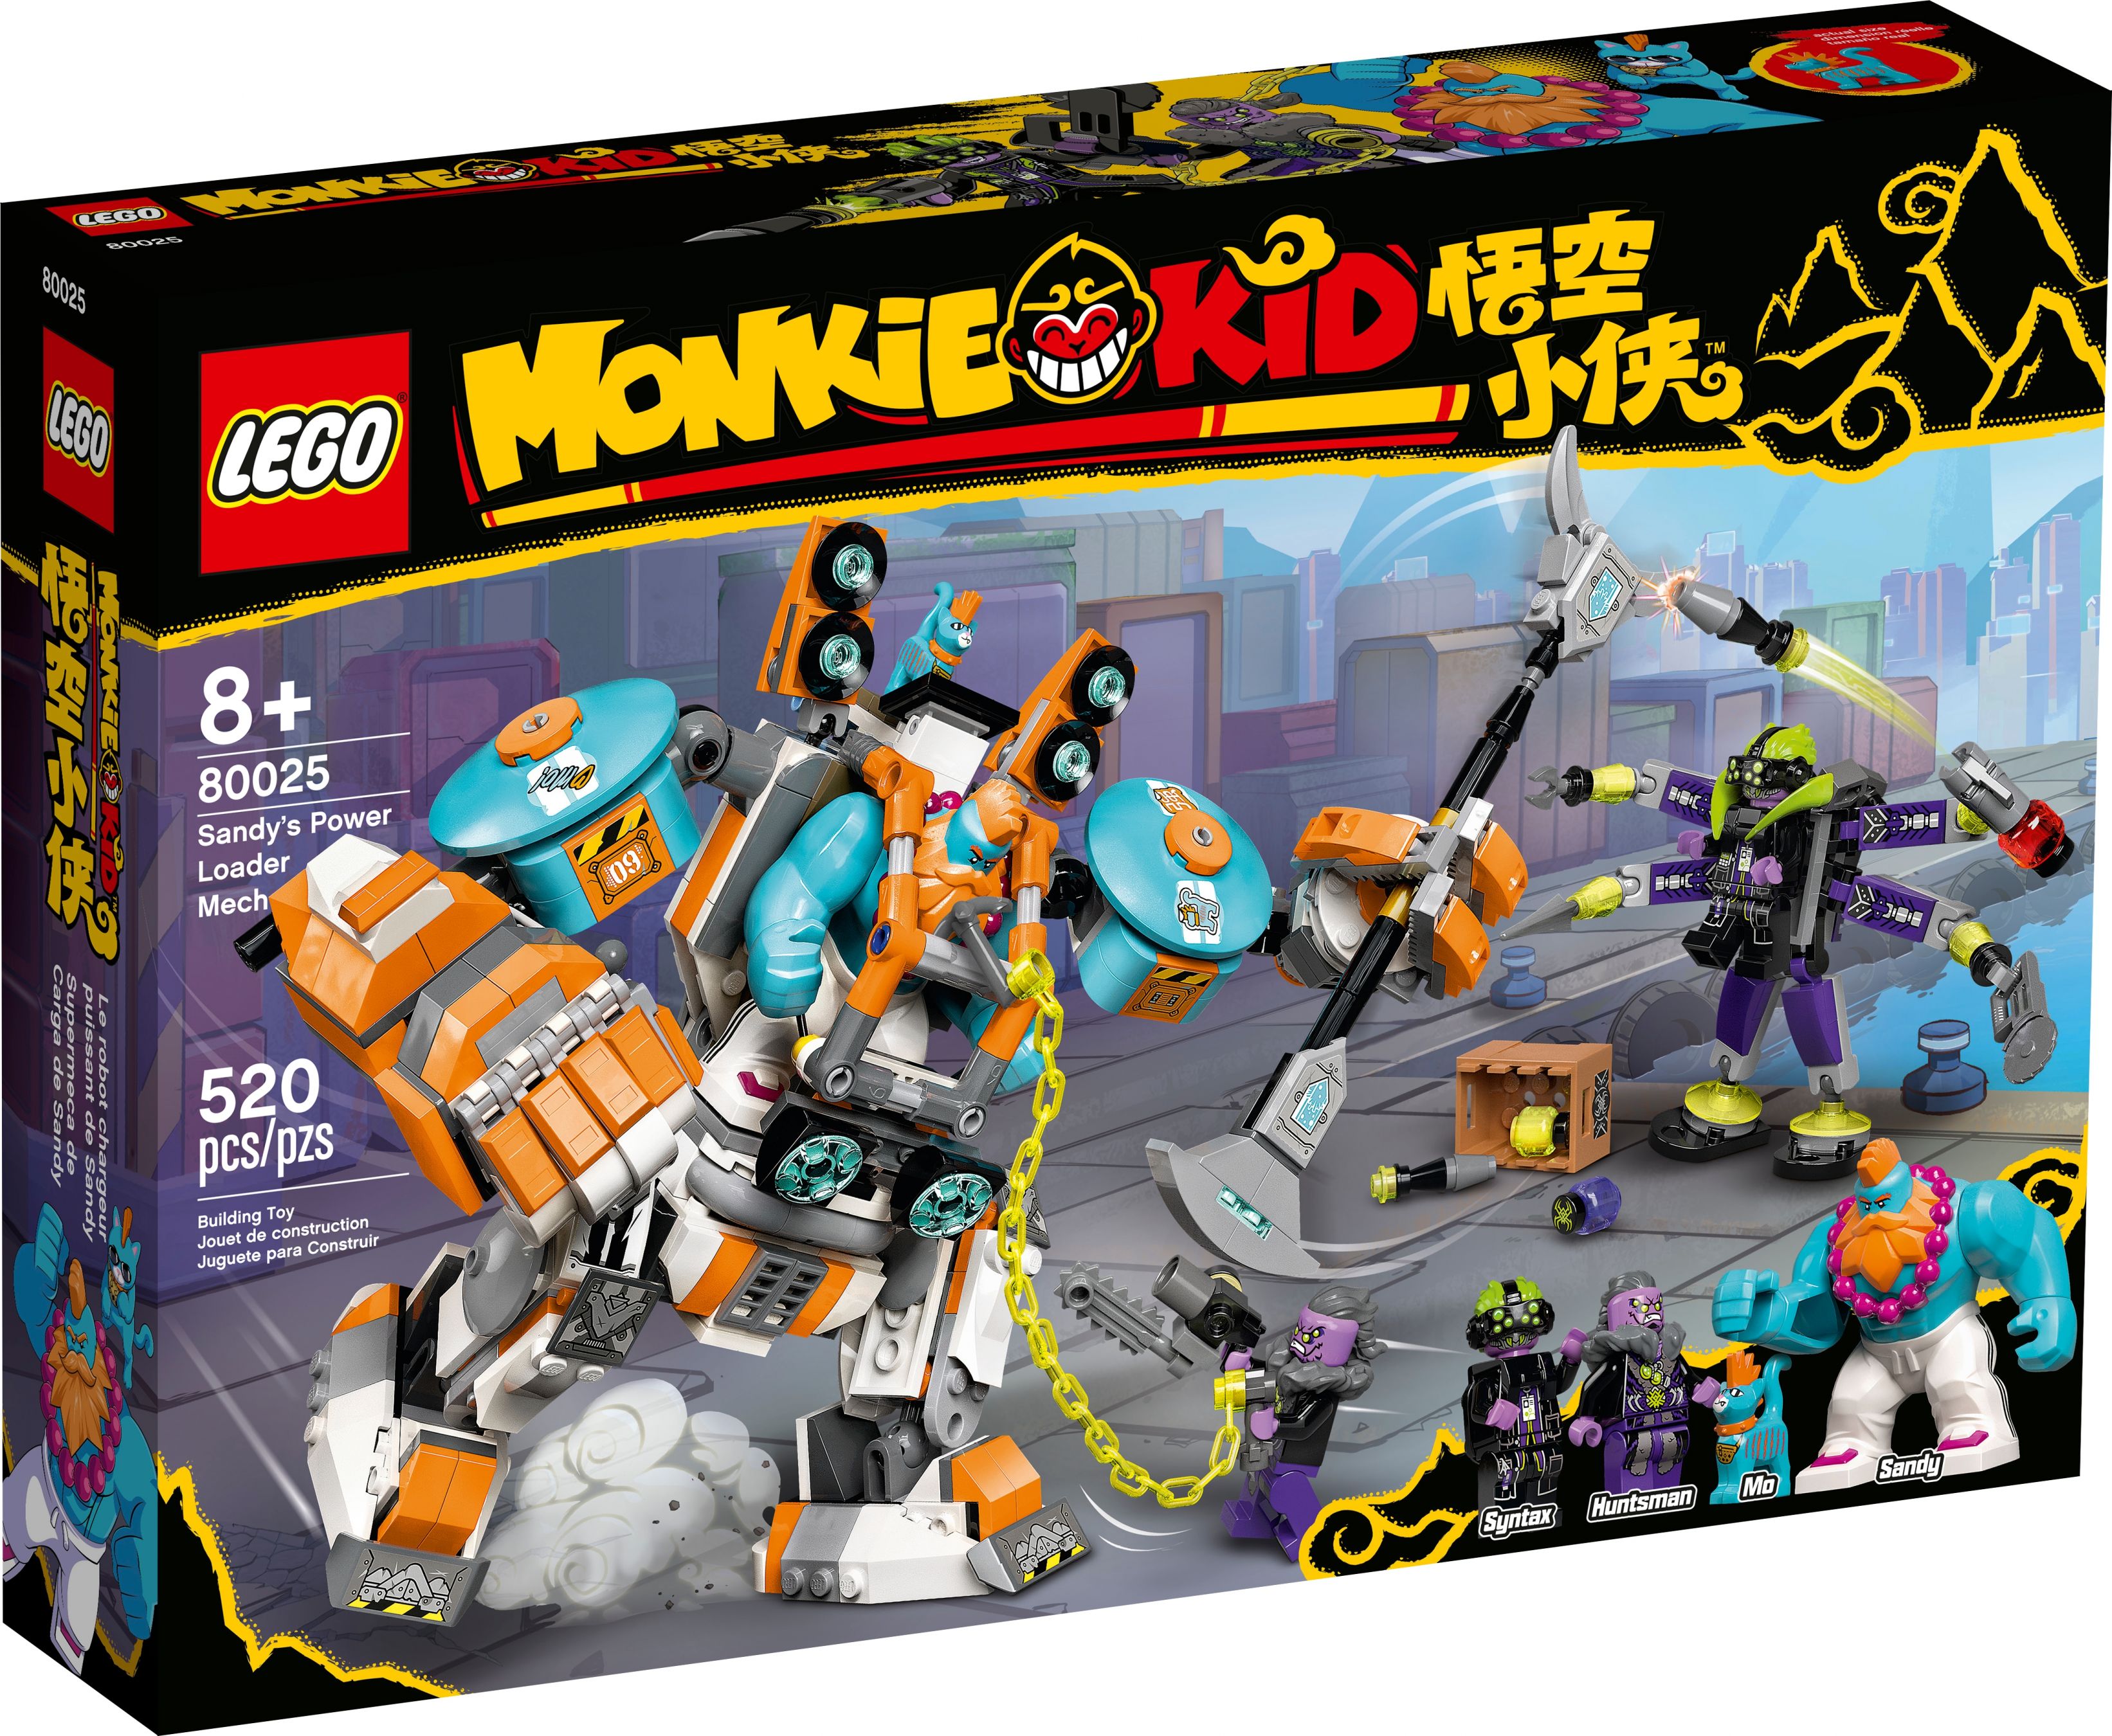 LEGO Monkie Kid 80025 Supermeca de Carga de Sandy LEGO_80025_alt1.jpg